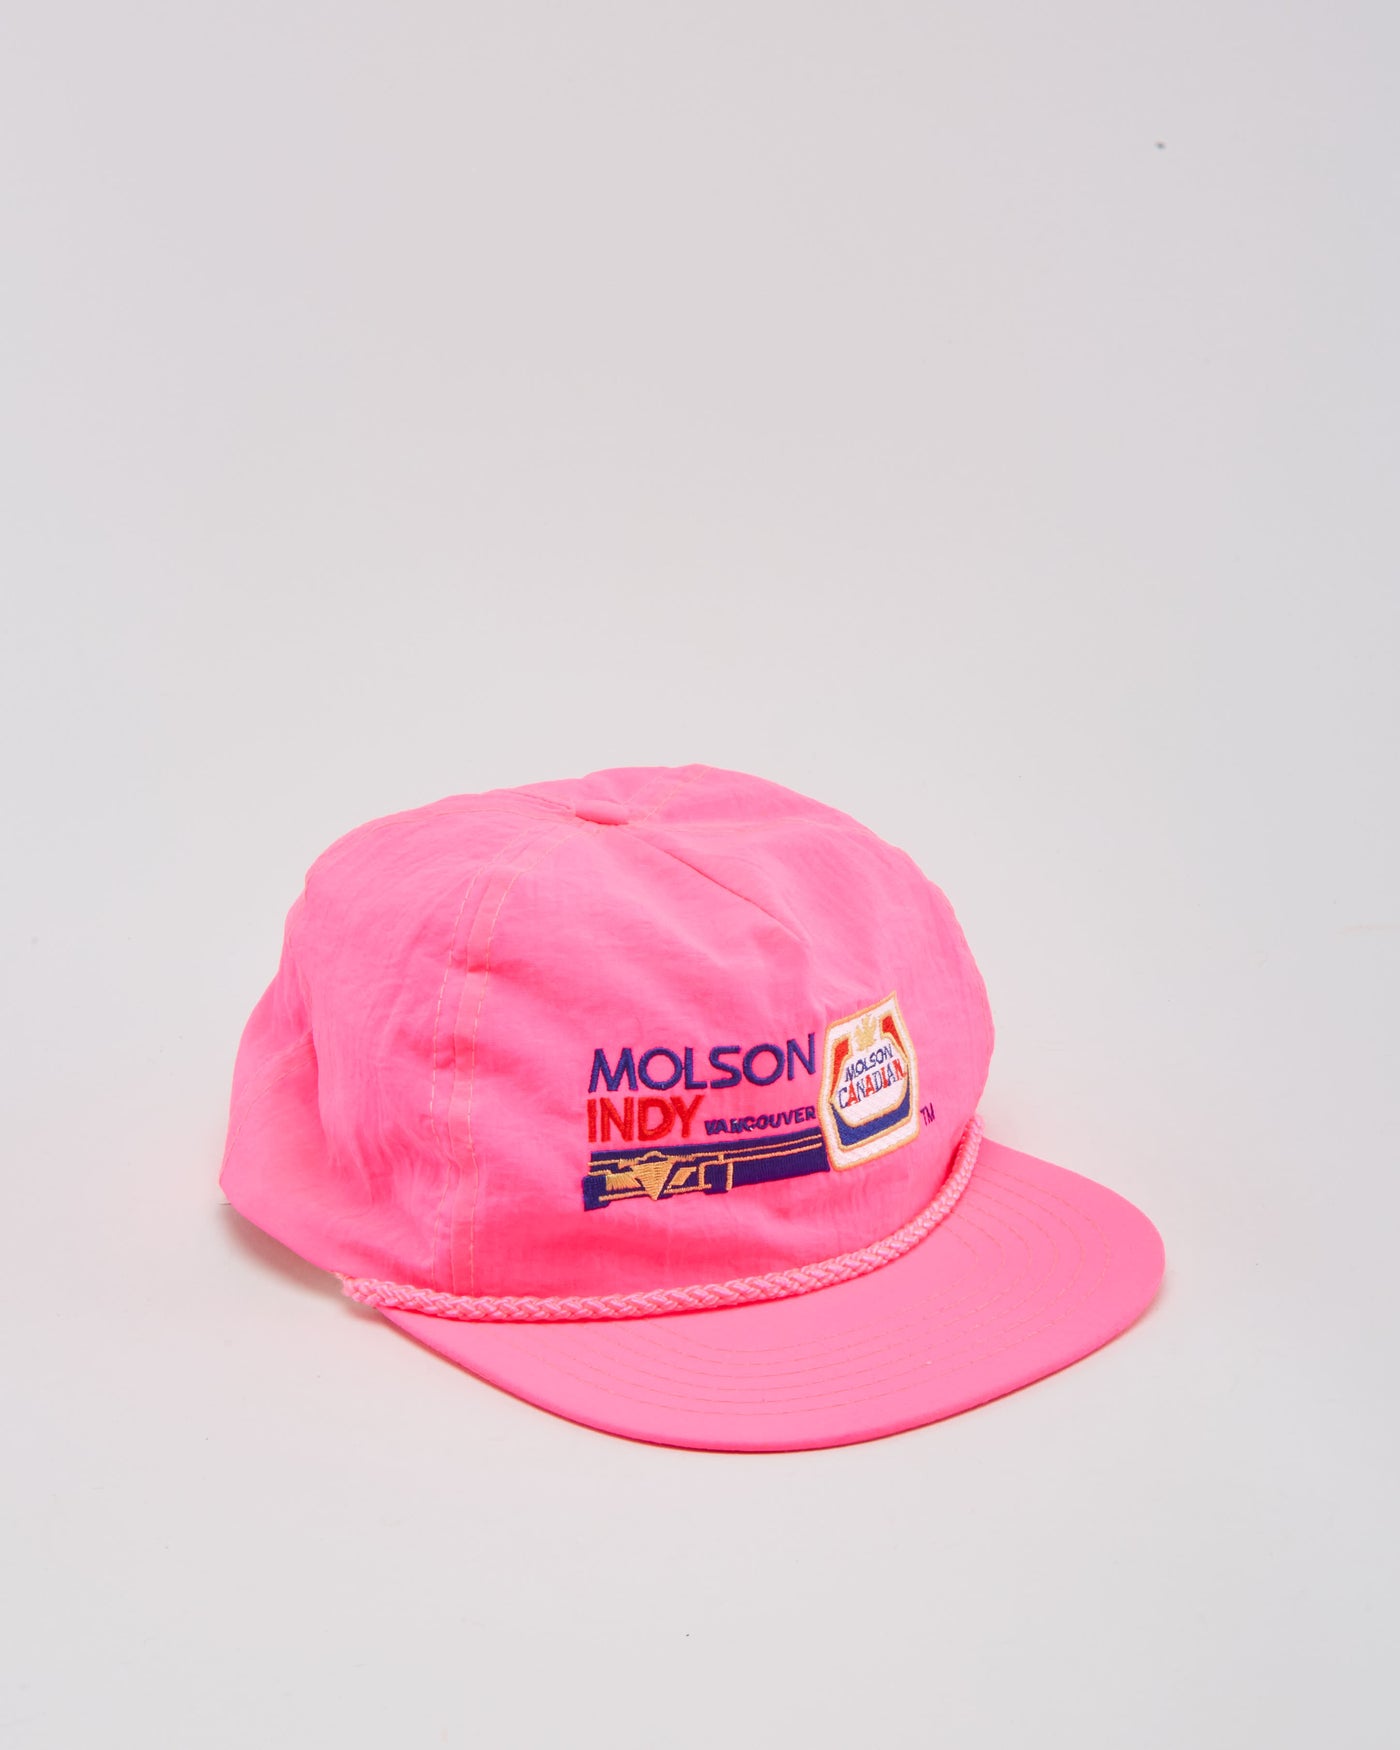 Vintage 90s Molson Indy Vancouver Racing Pink Snapback Cap